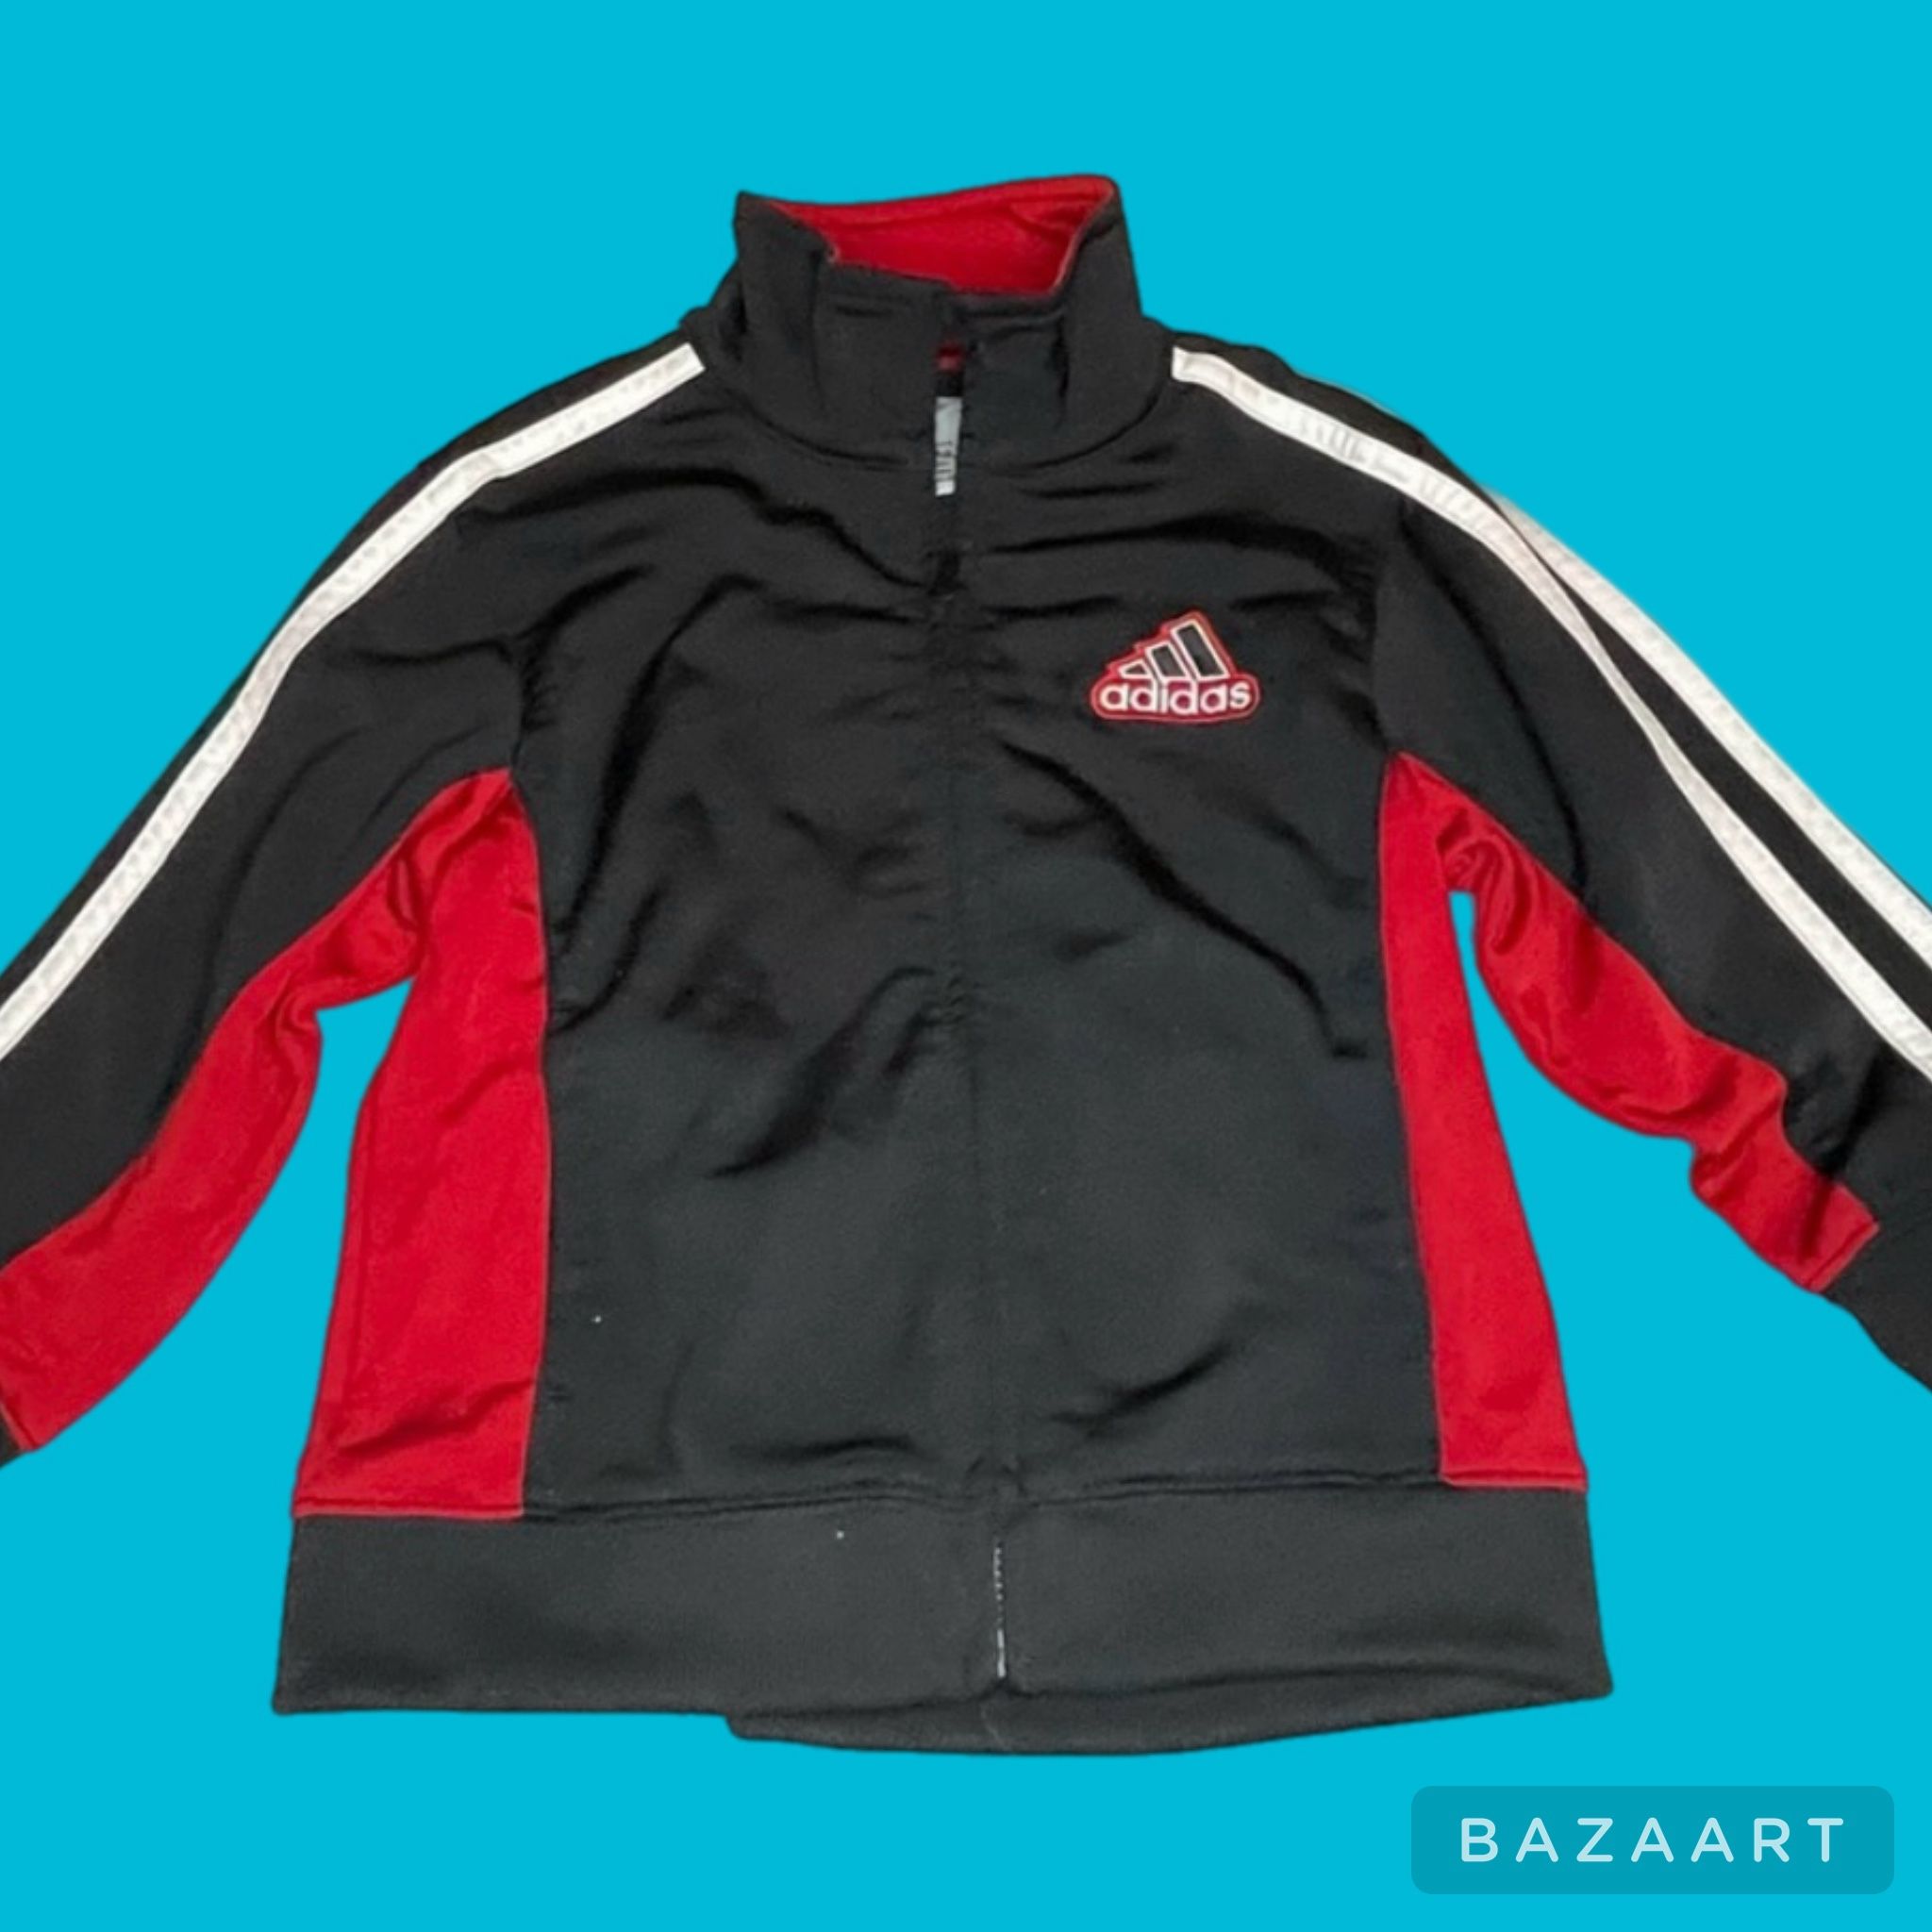 SZ 3t ADIDAS Boys Jacket Track Black Red Athletic Zipper Athletic